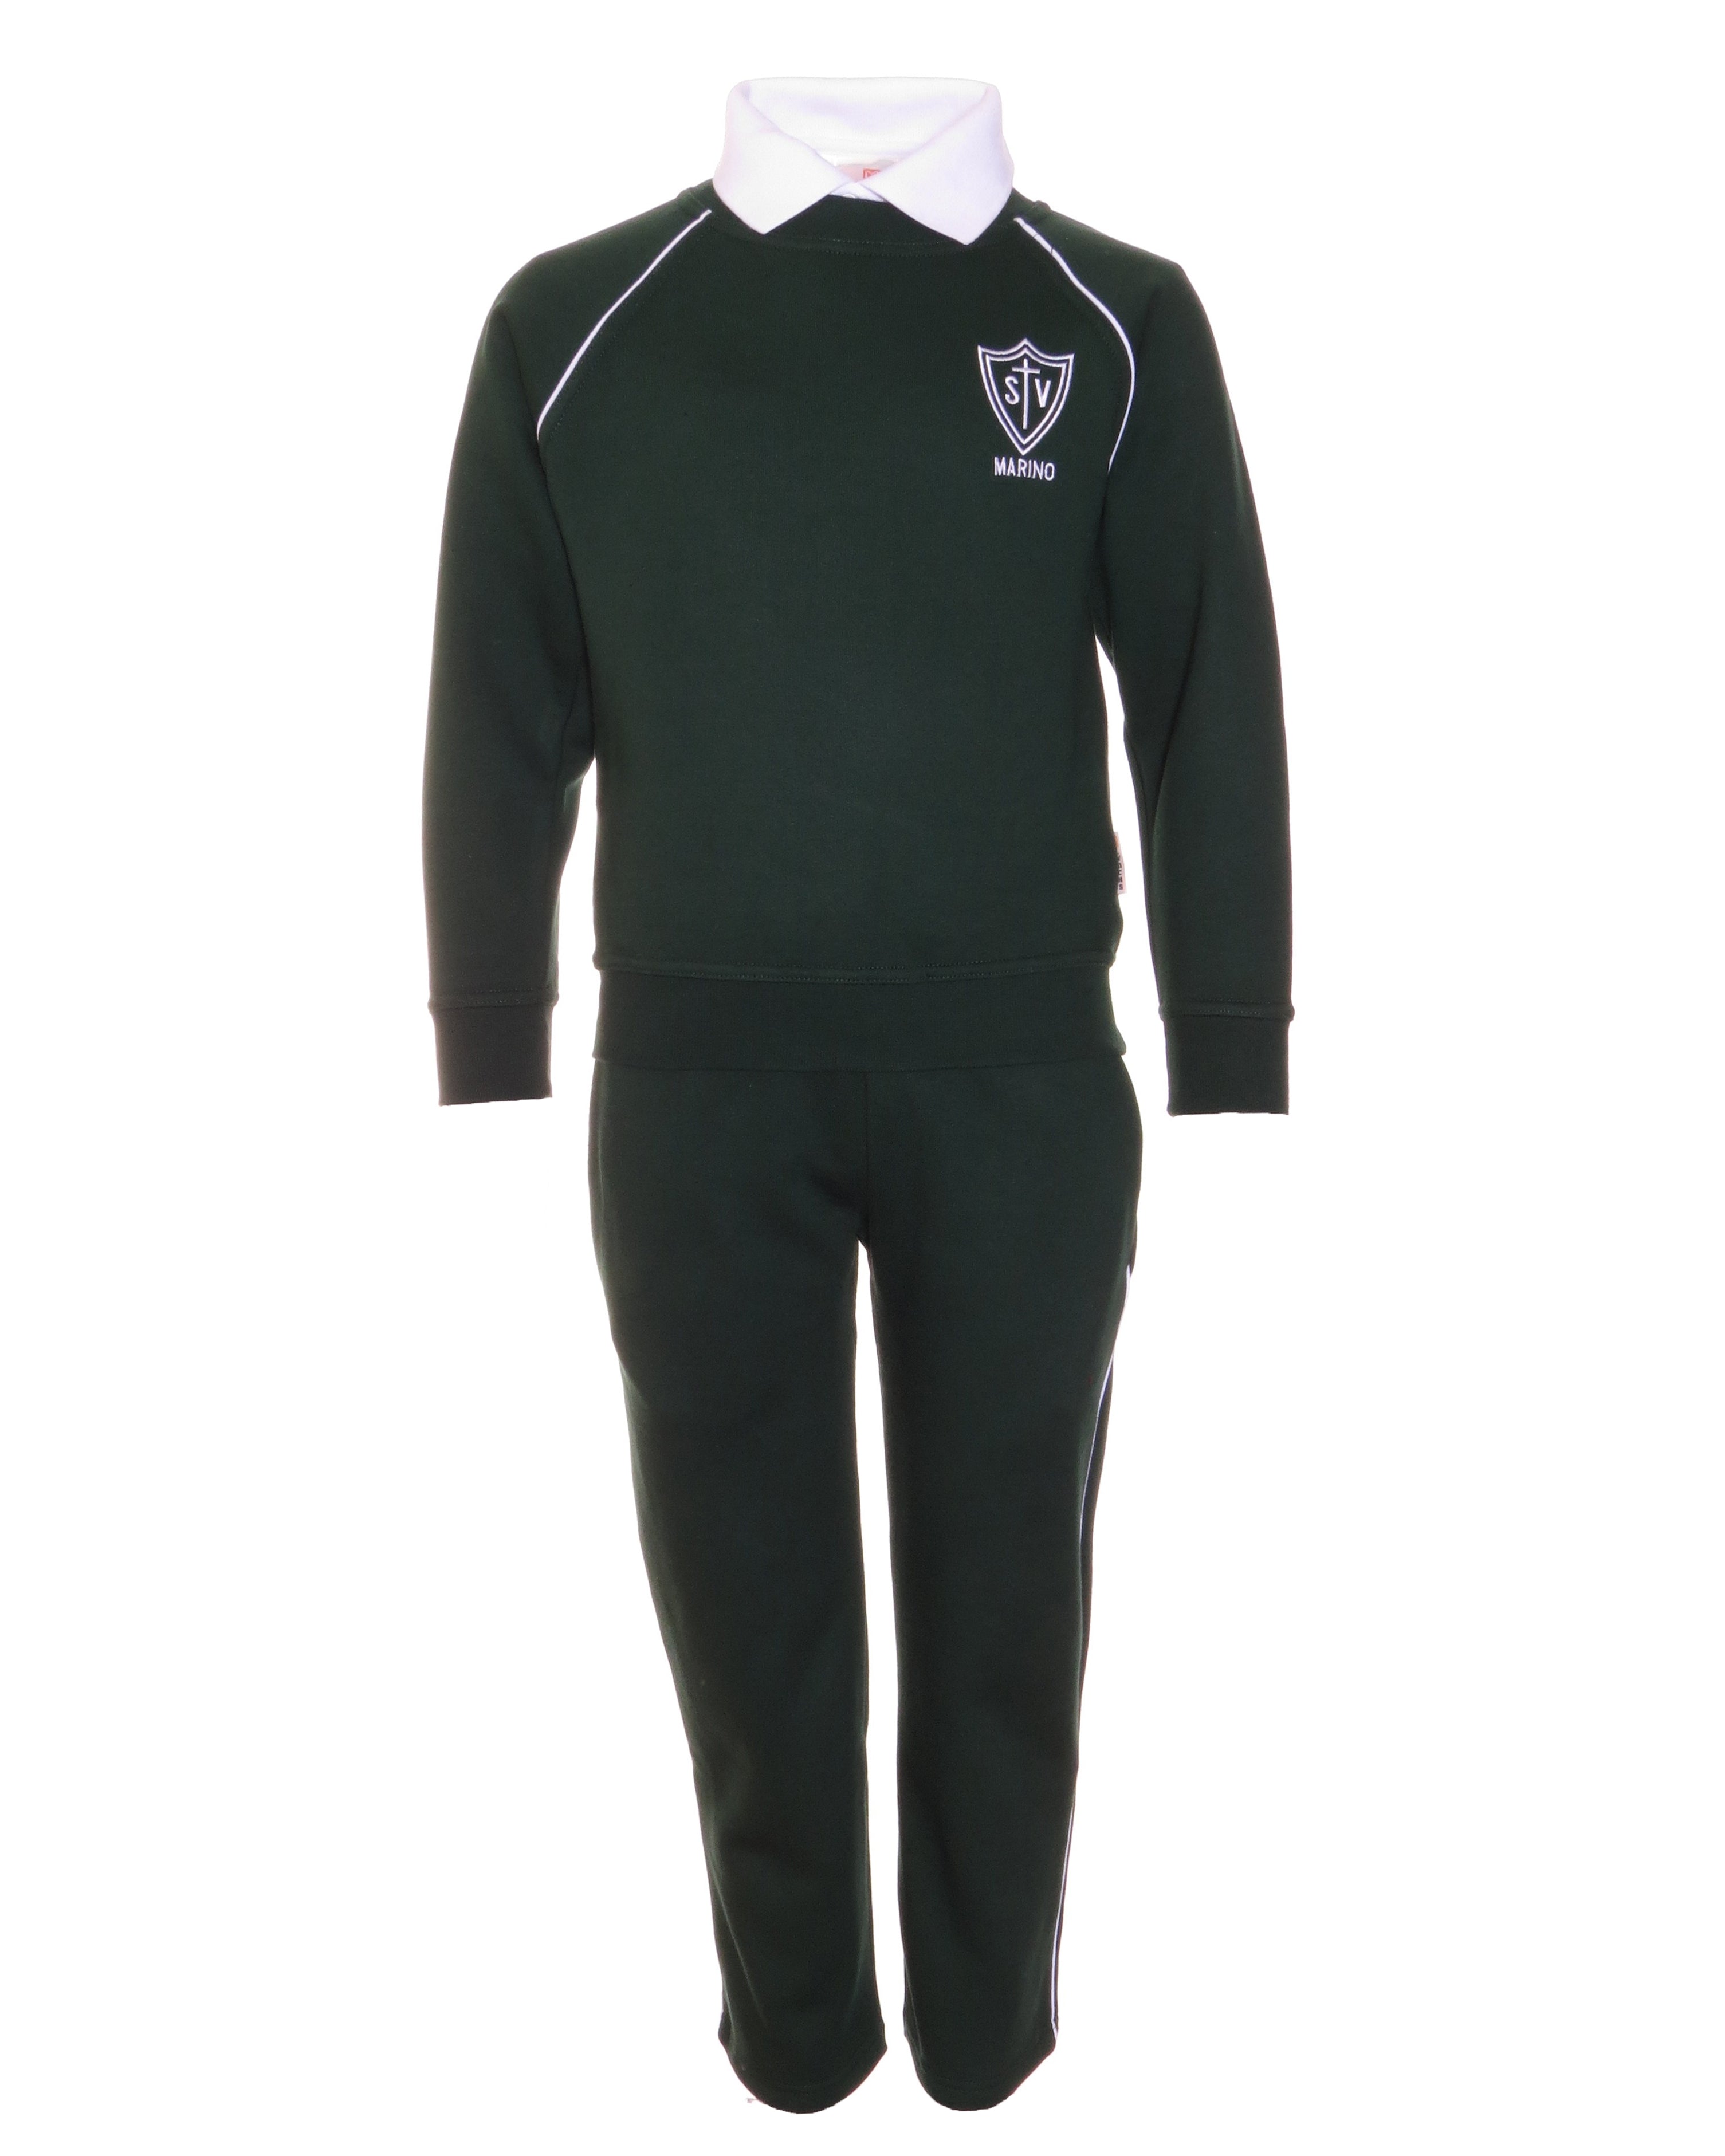 St. Patrick's Navy/Red Tracksuit Bottoms - School Uniforms Direct Ireland